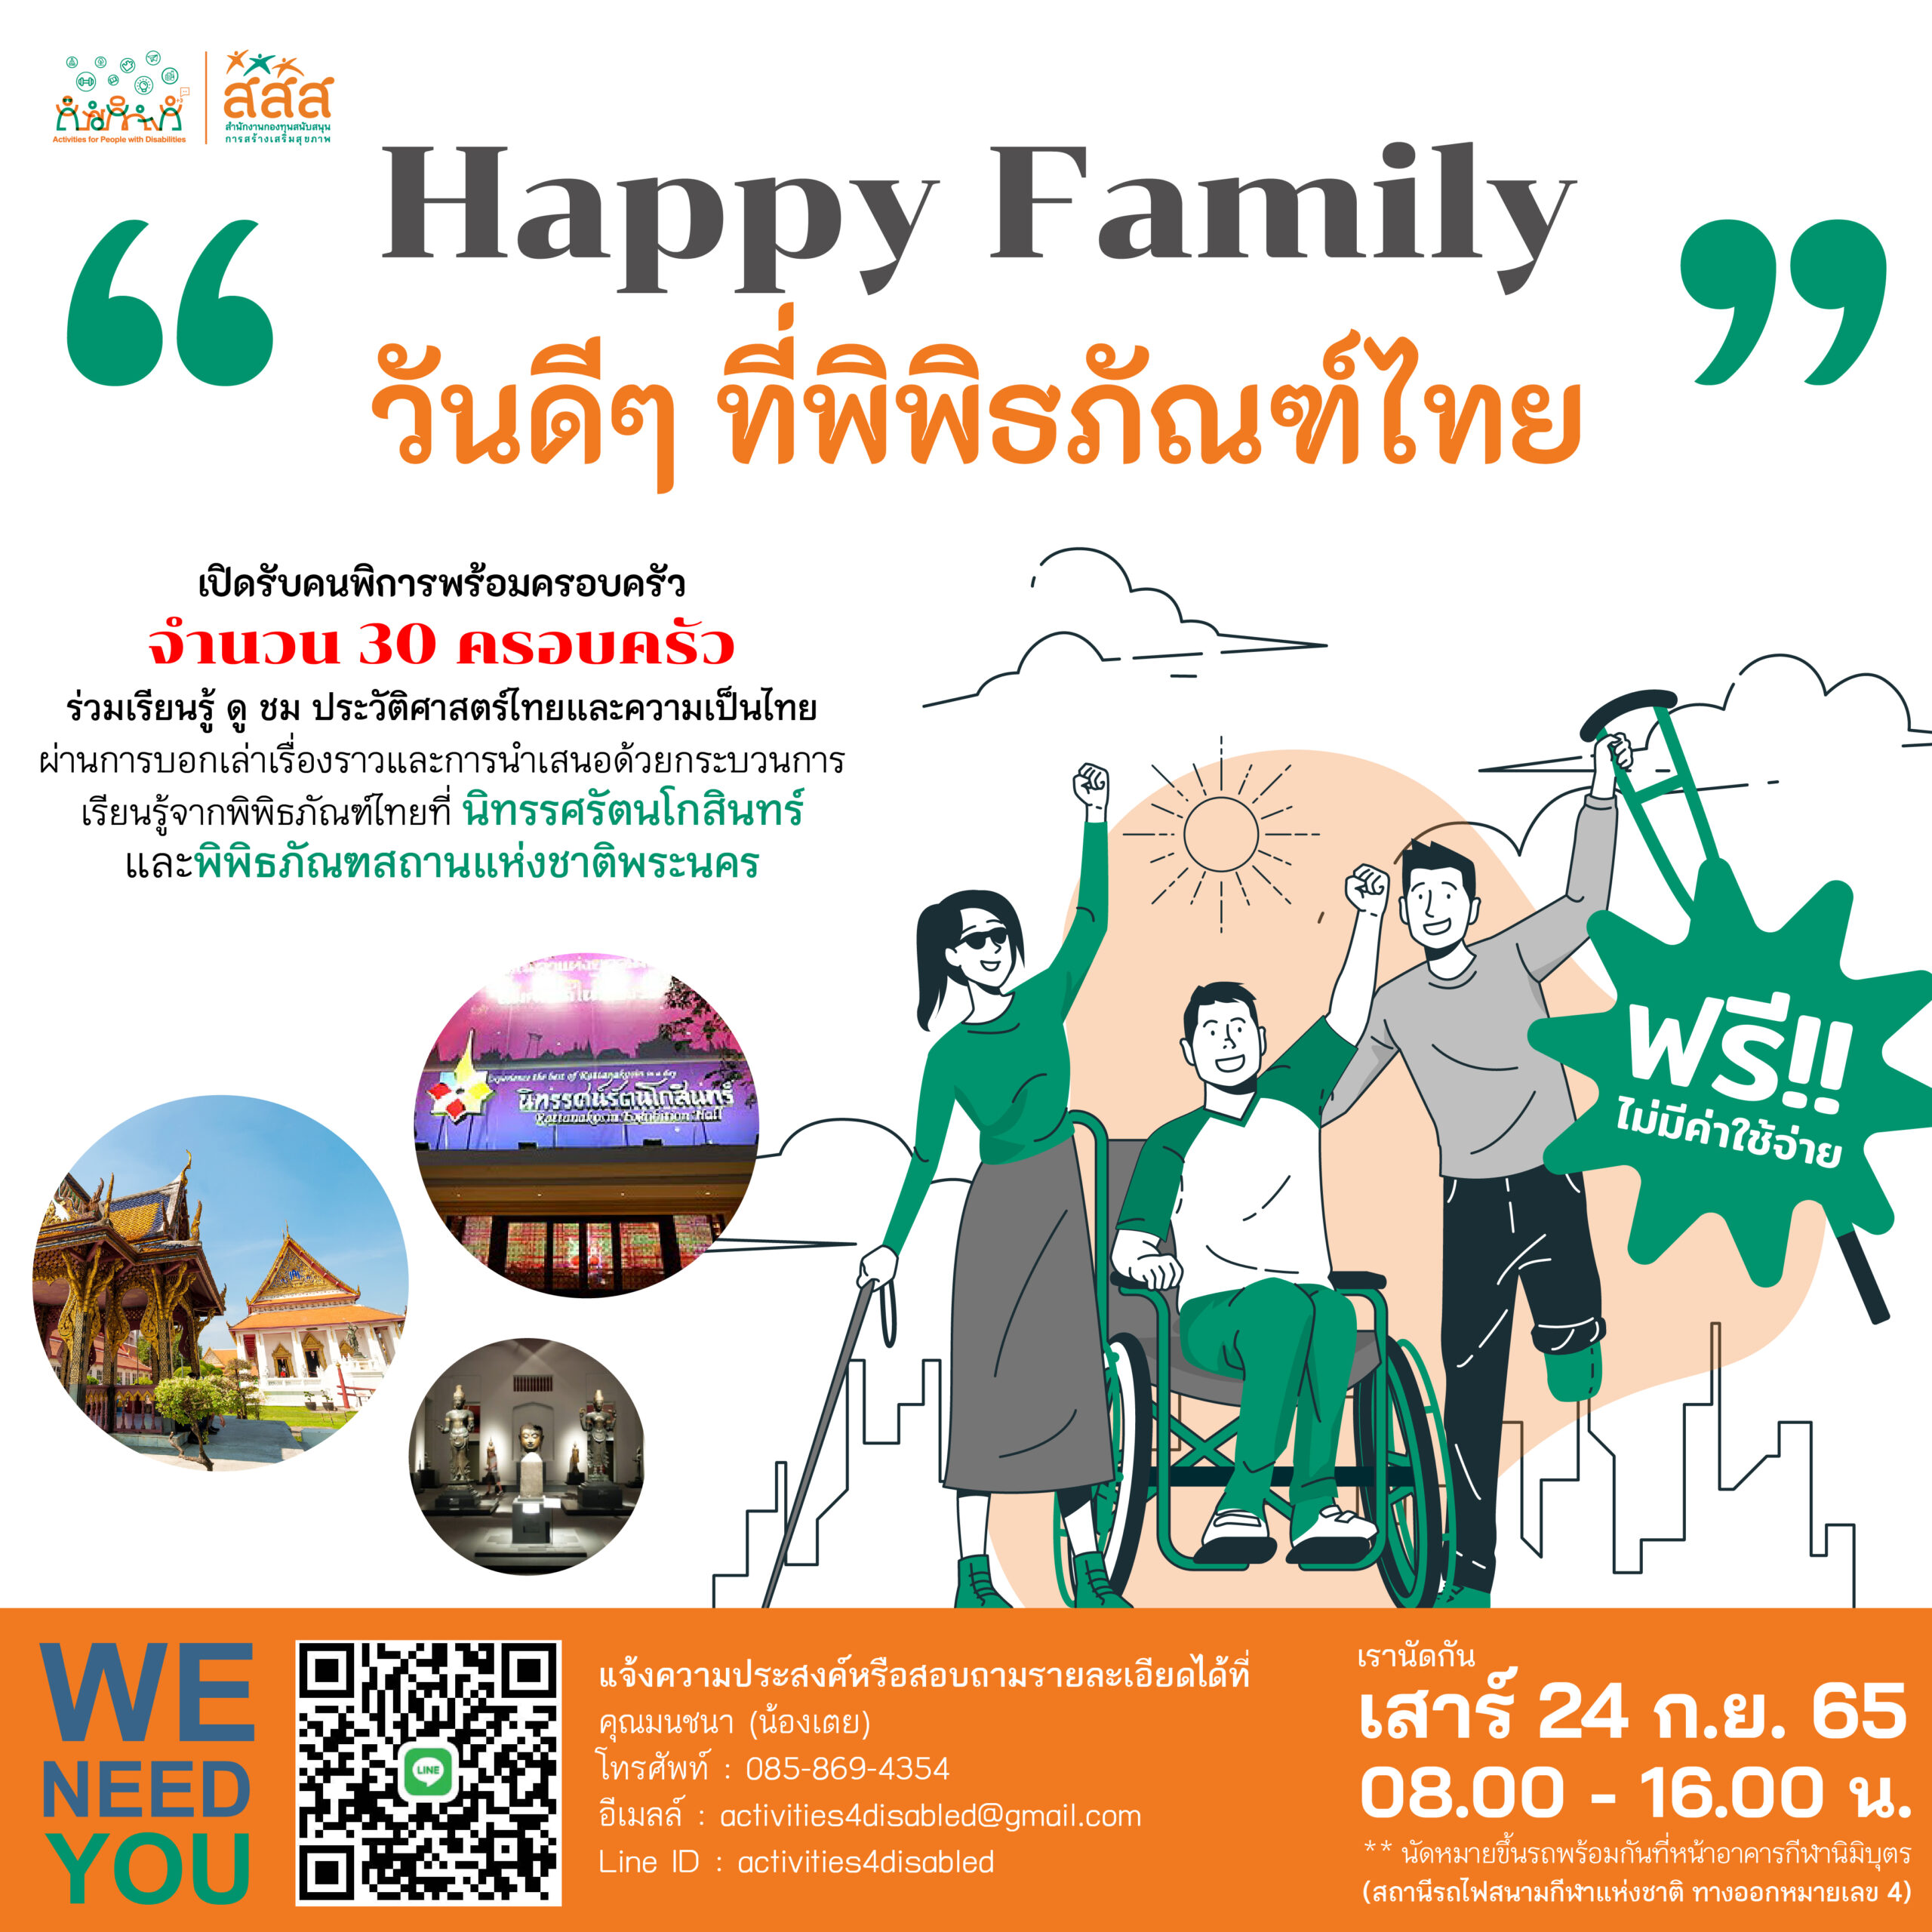 “Happy Family : วันดีๆ ที่พิพิธภัณฑ์ไทย”